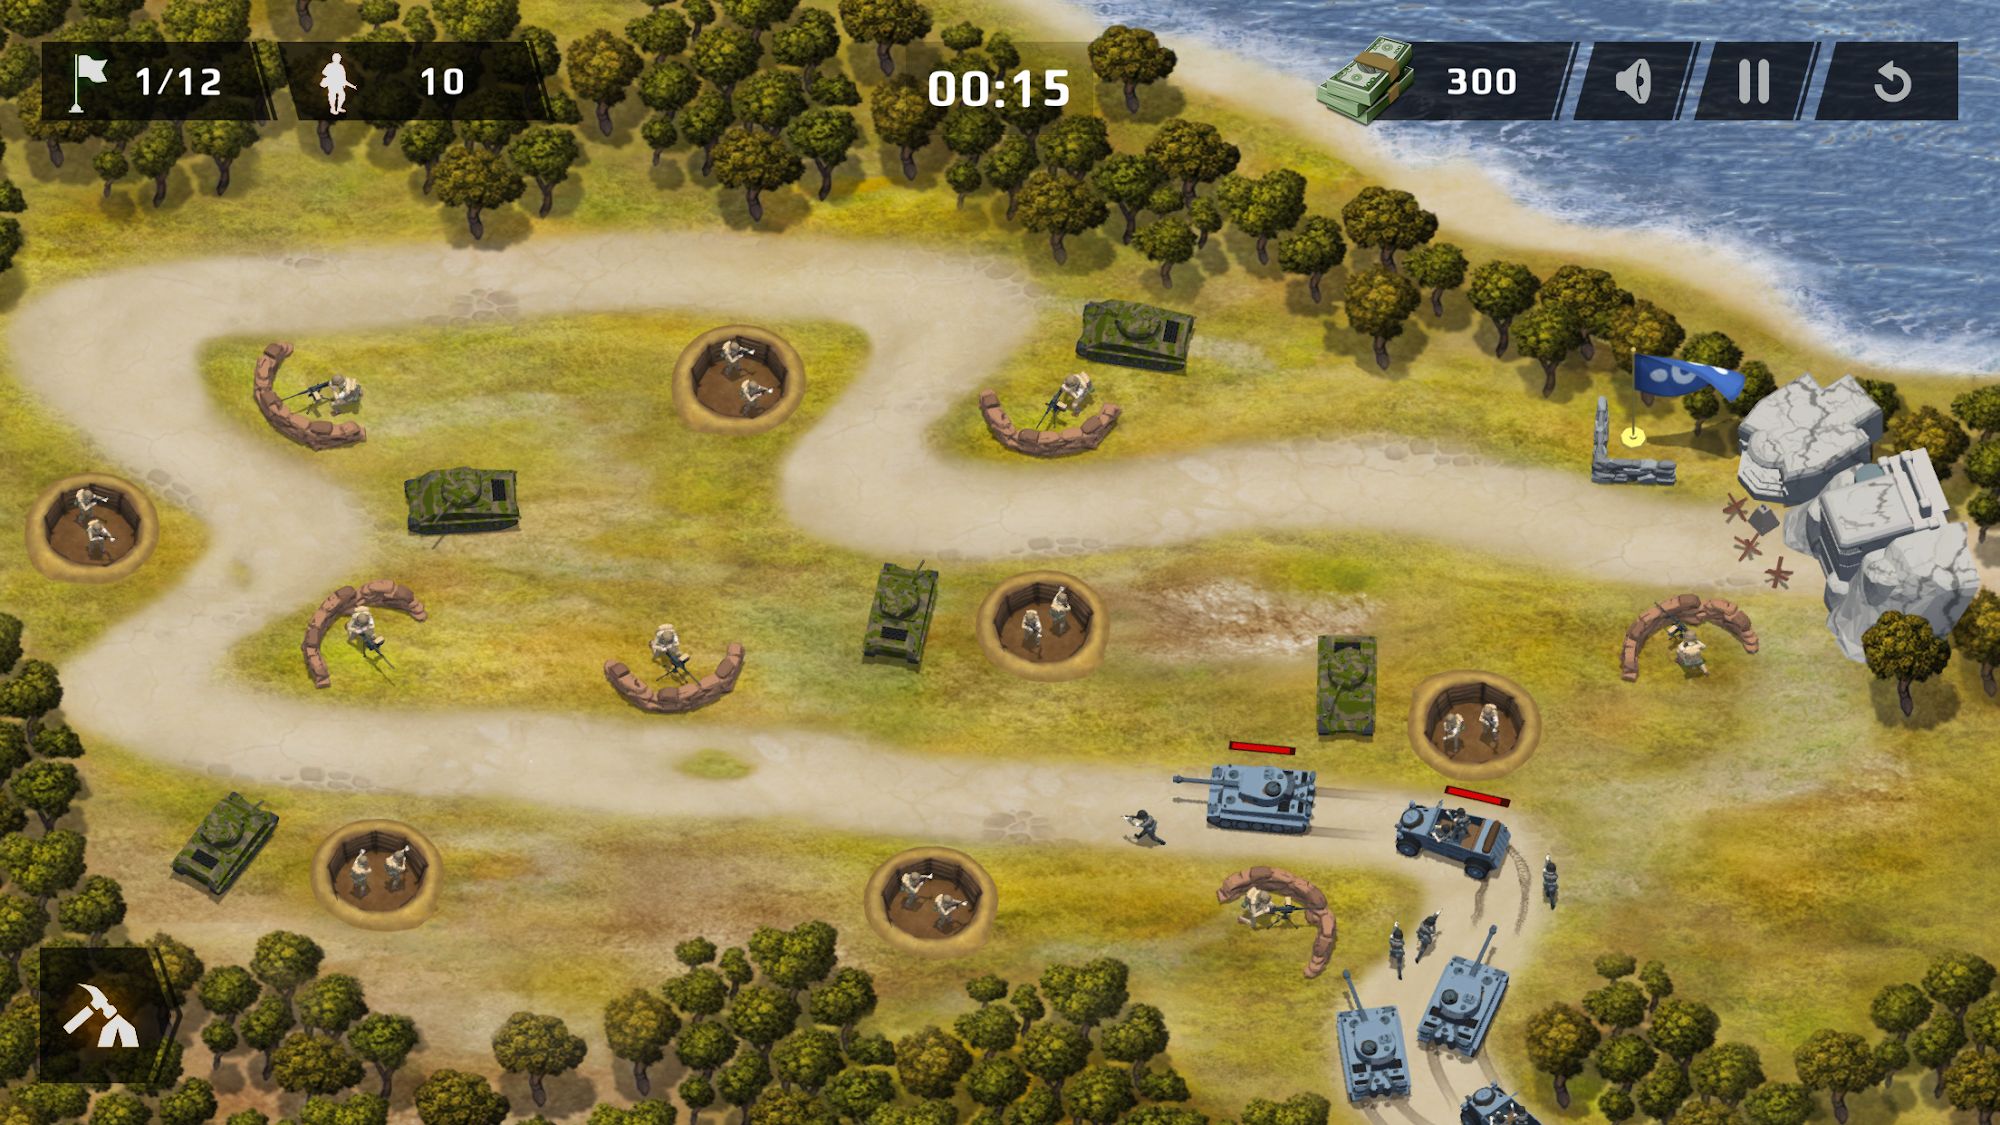 Скачать WWII Defense: RTS Army TD game: Android Про войну игра на телефон и планшет.